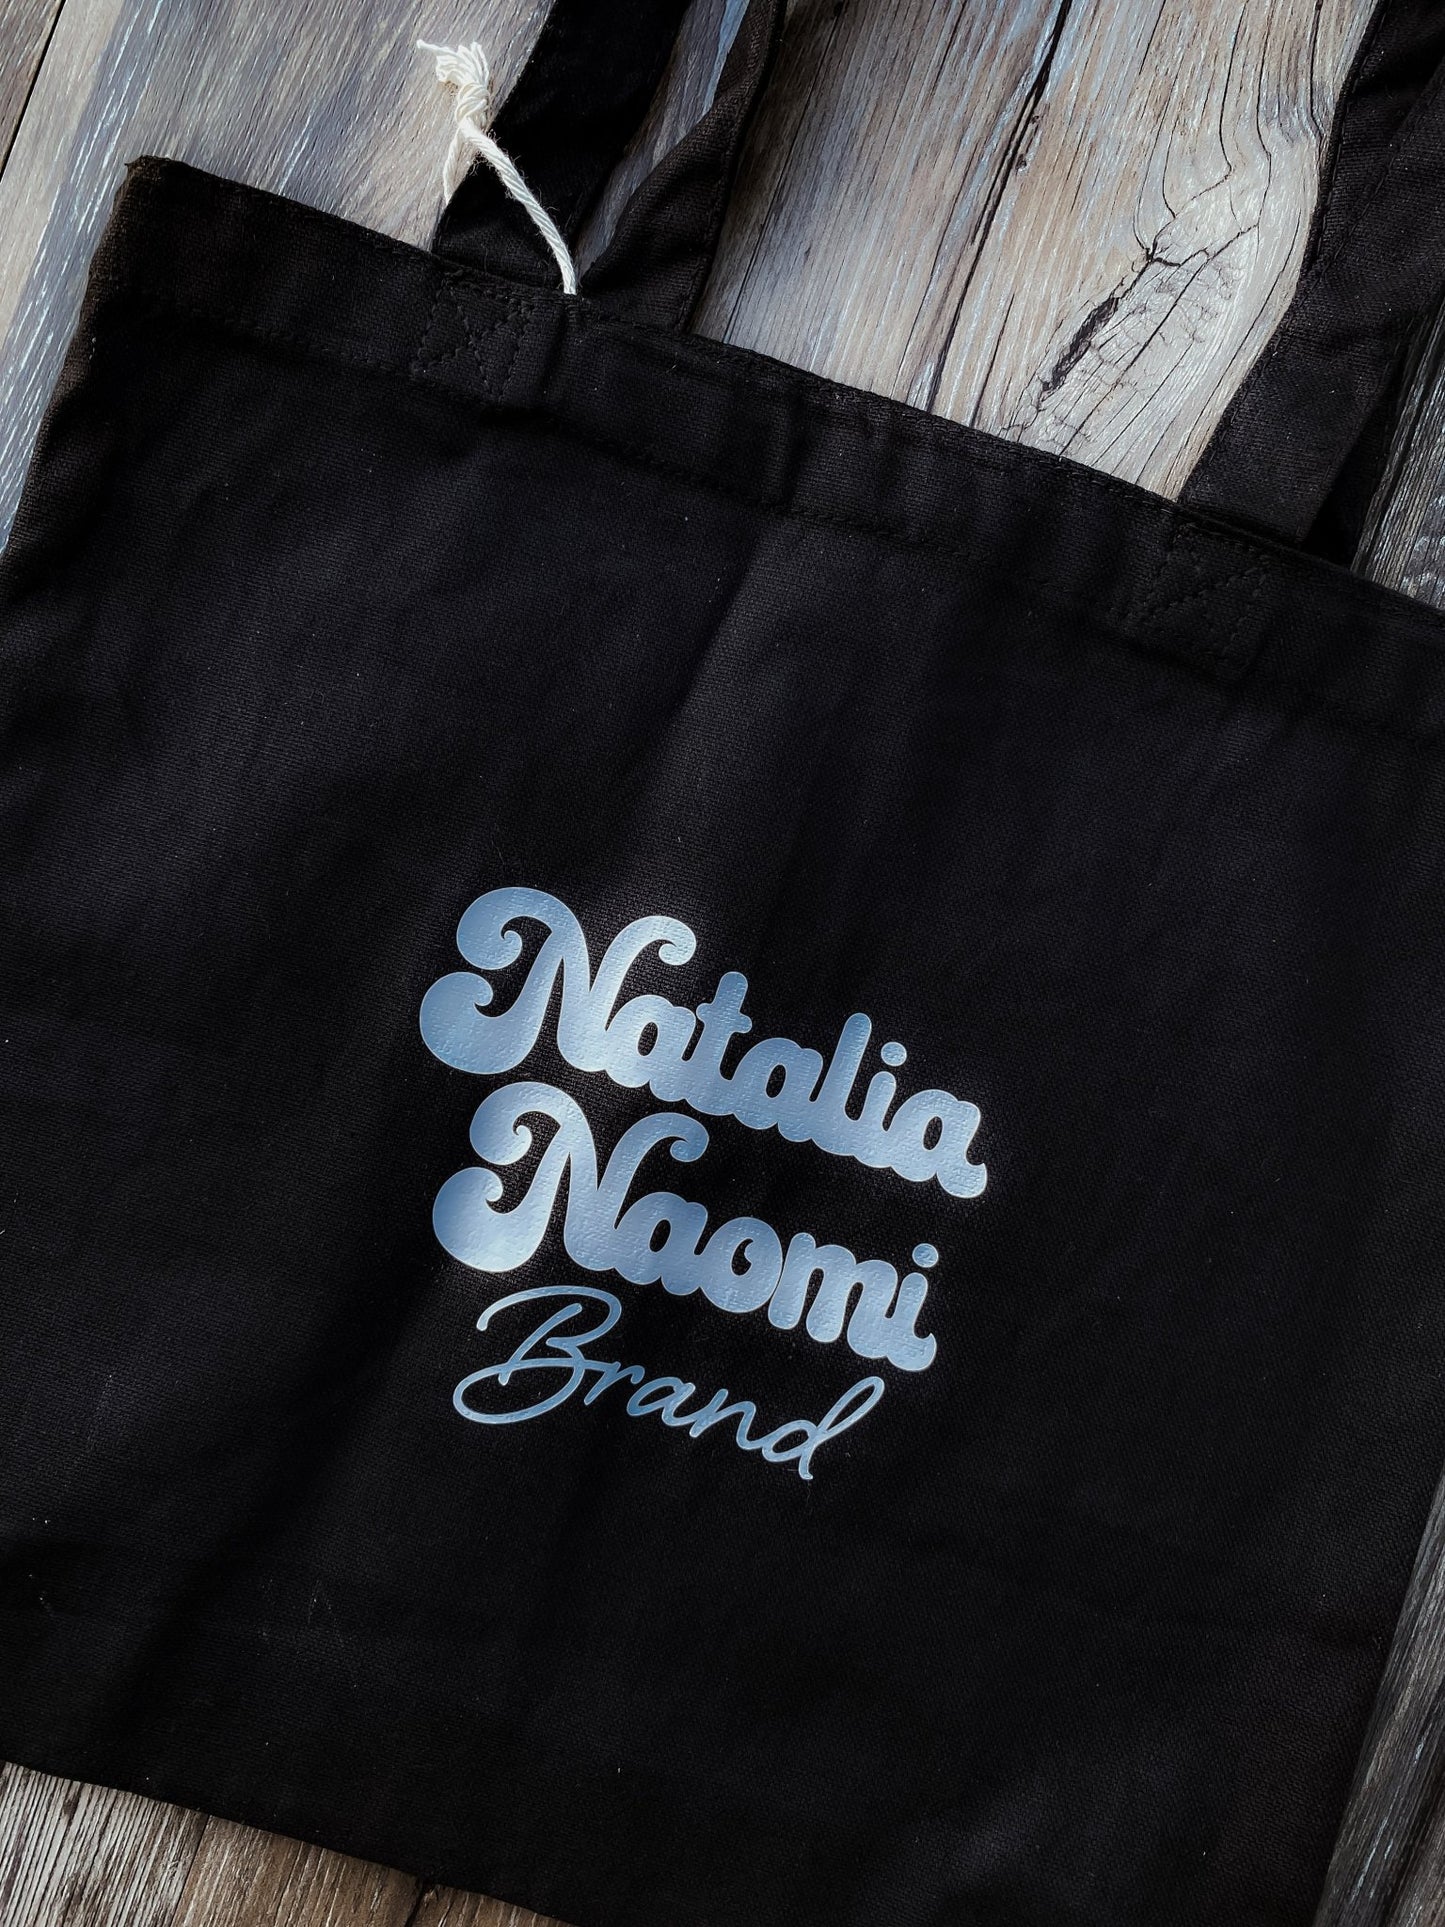 Logo Tote Bag - Natalia Naomi Brand